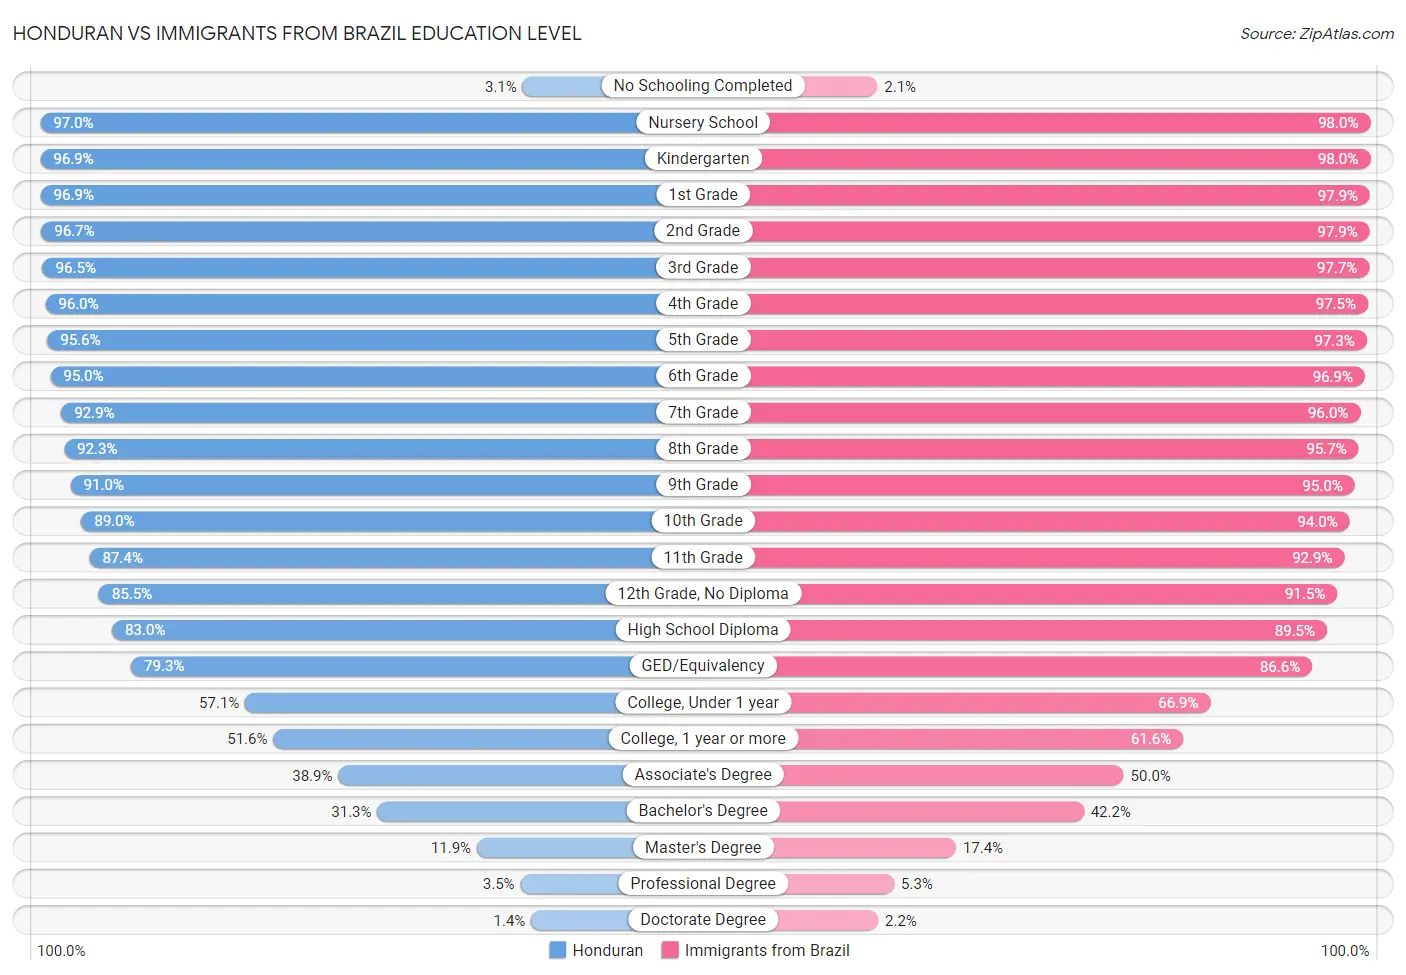 Honduran vs Immigrants from Brazil Education Level